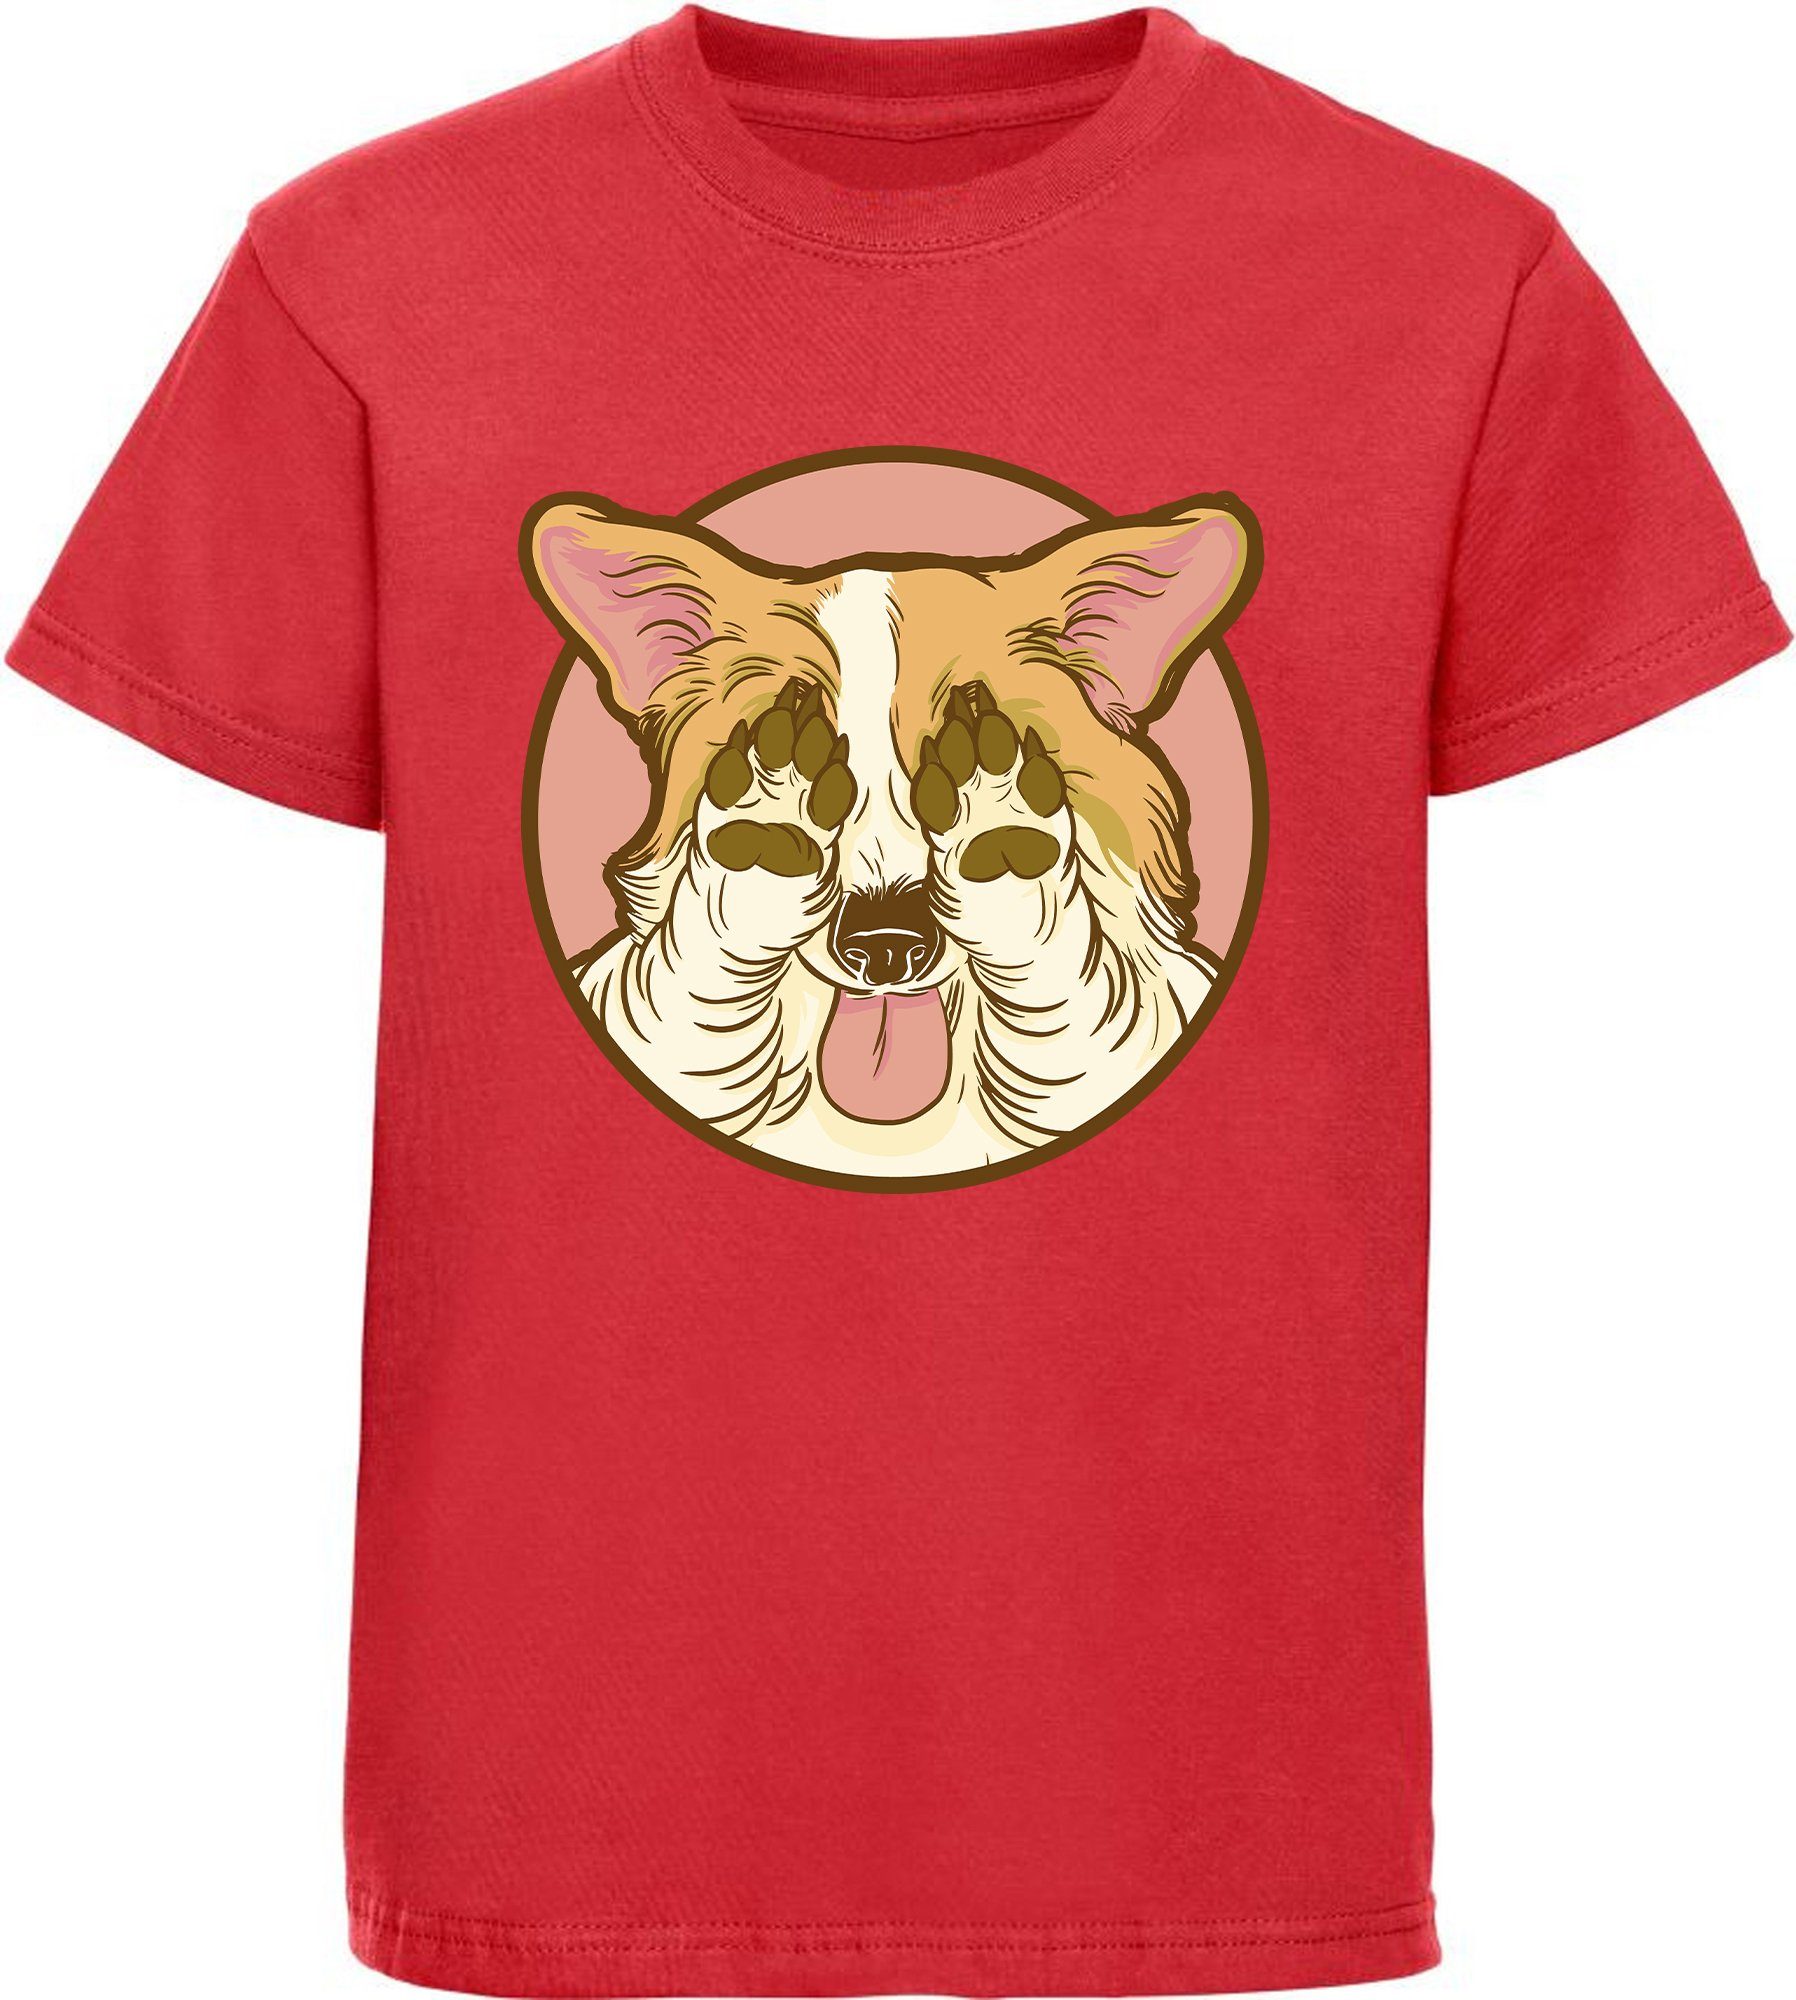 rot zu i226 Kinder mit Baumwollshirt bedrucktes T-Shirt MyDesign24 Print-Shirt Augen hält Hunde Corgi - der seine Aufdruck,